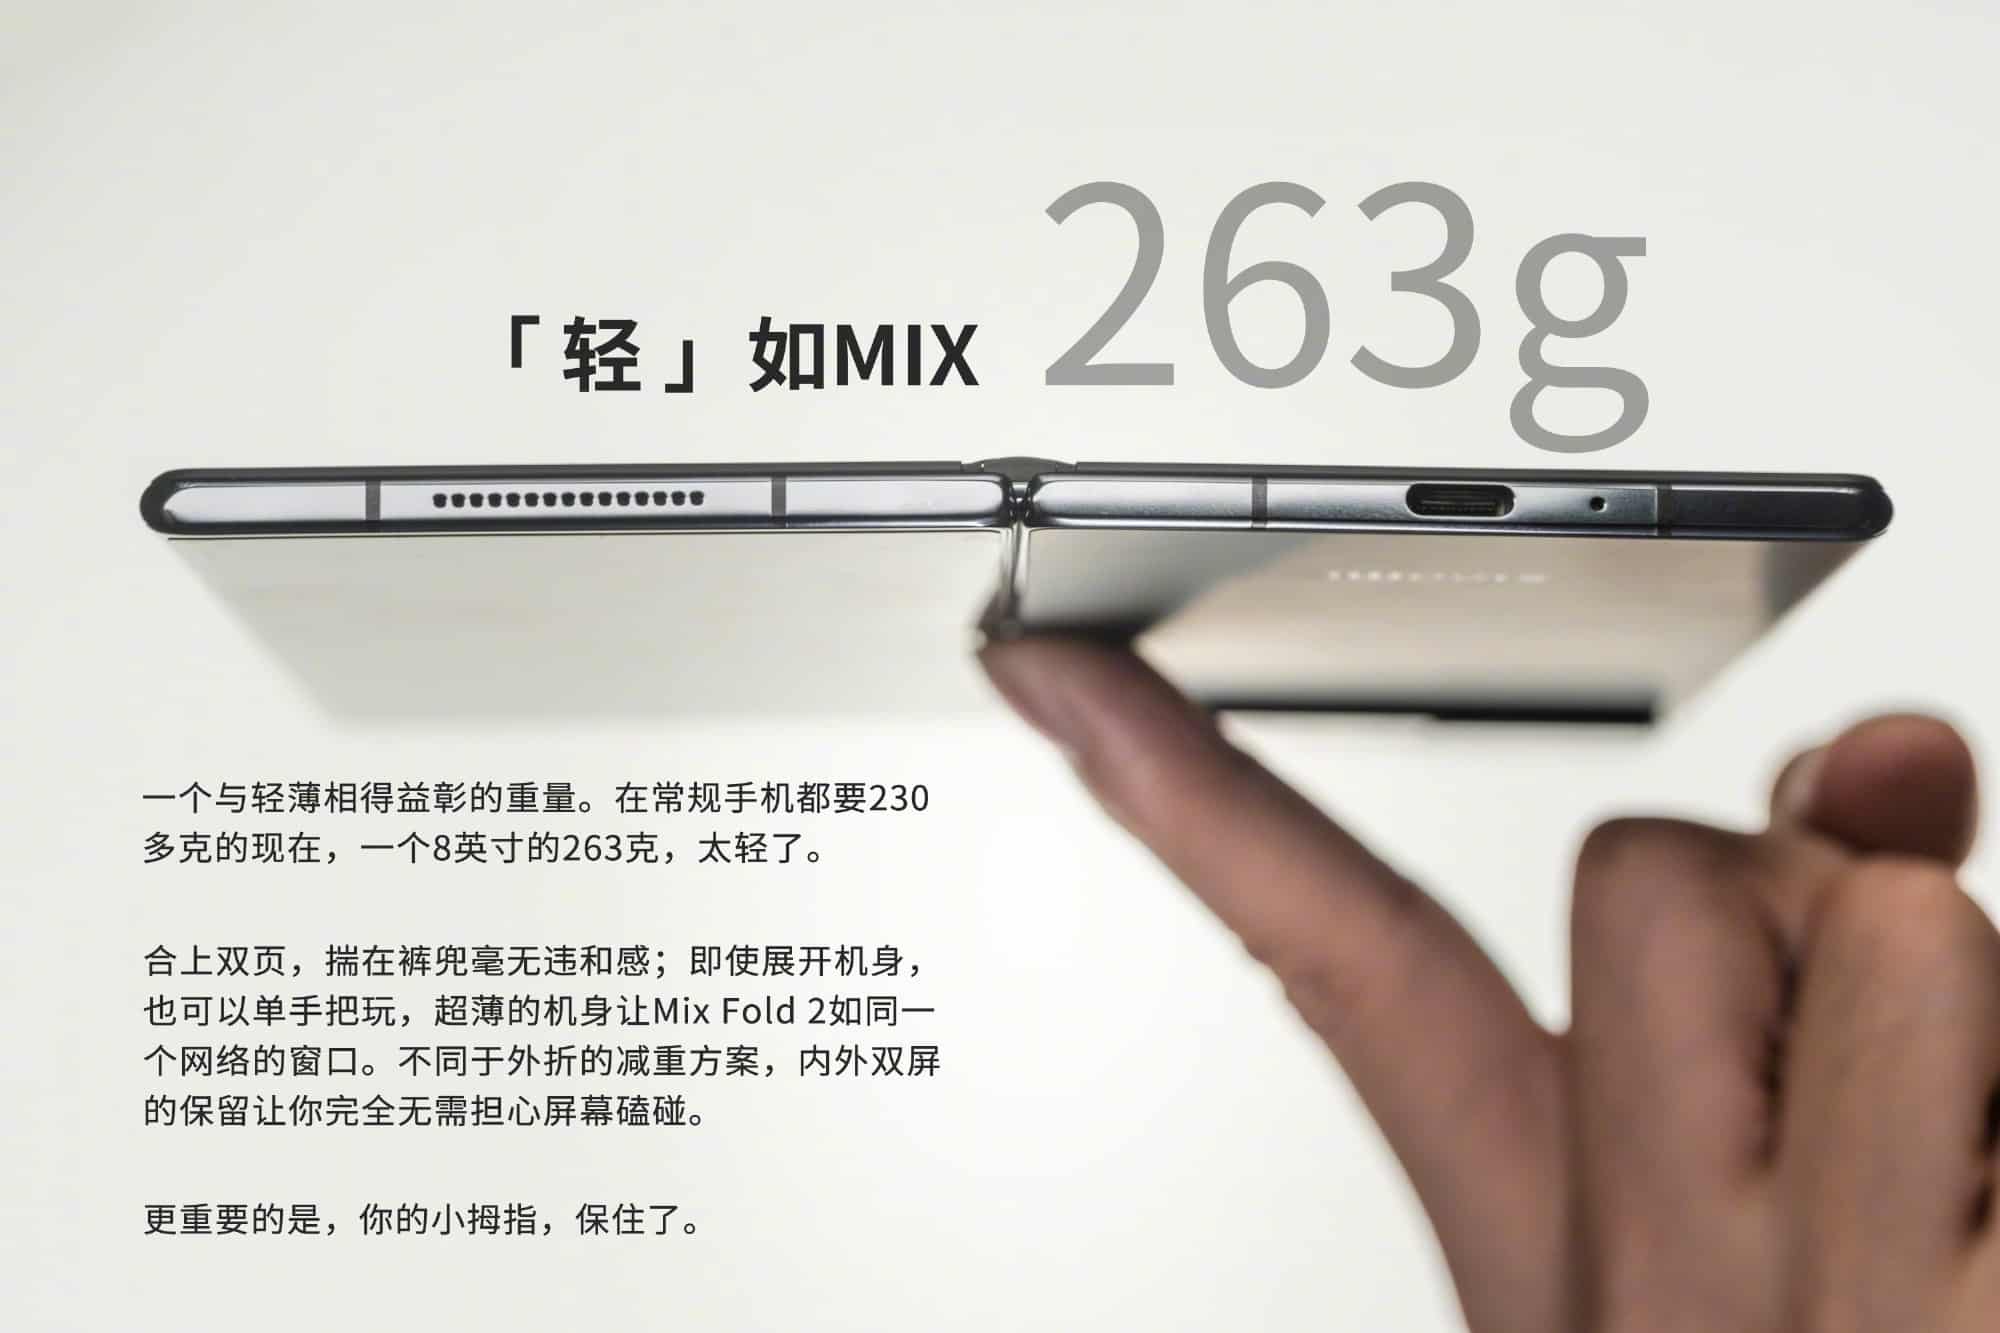 Xiaomi MIX Fold 2 weight